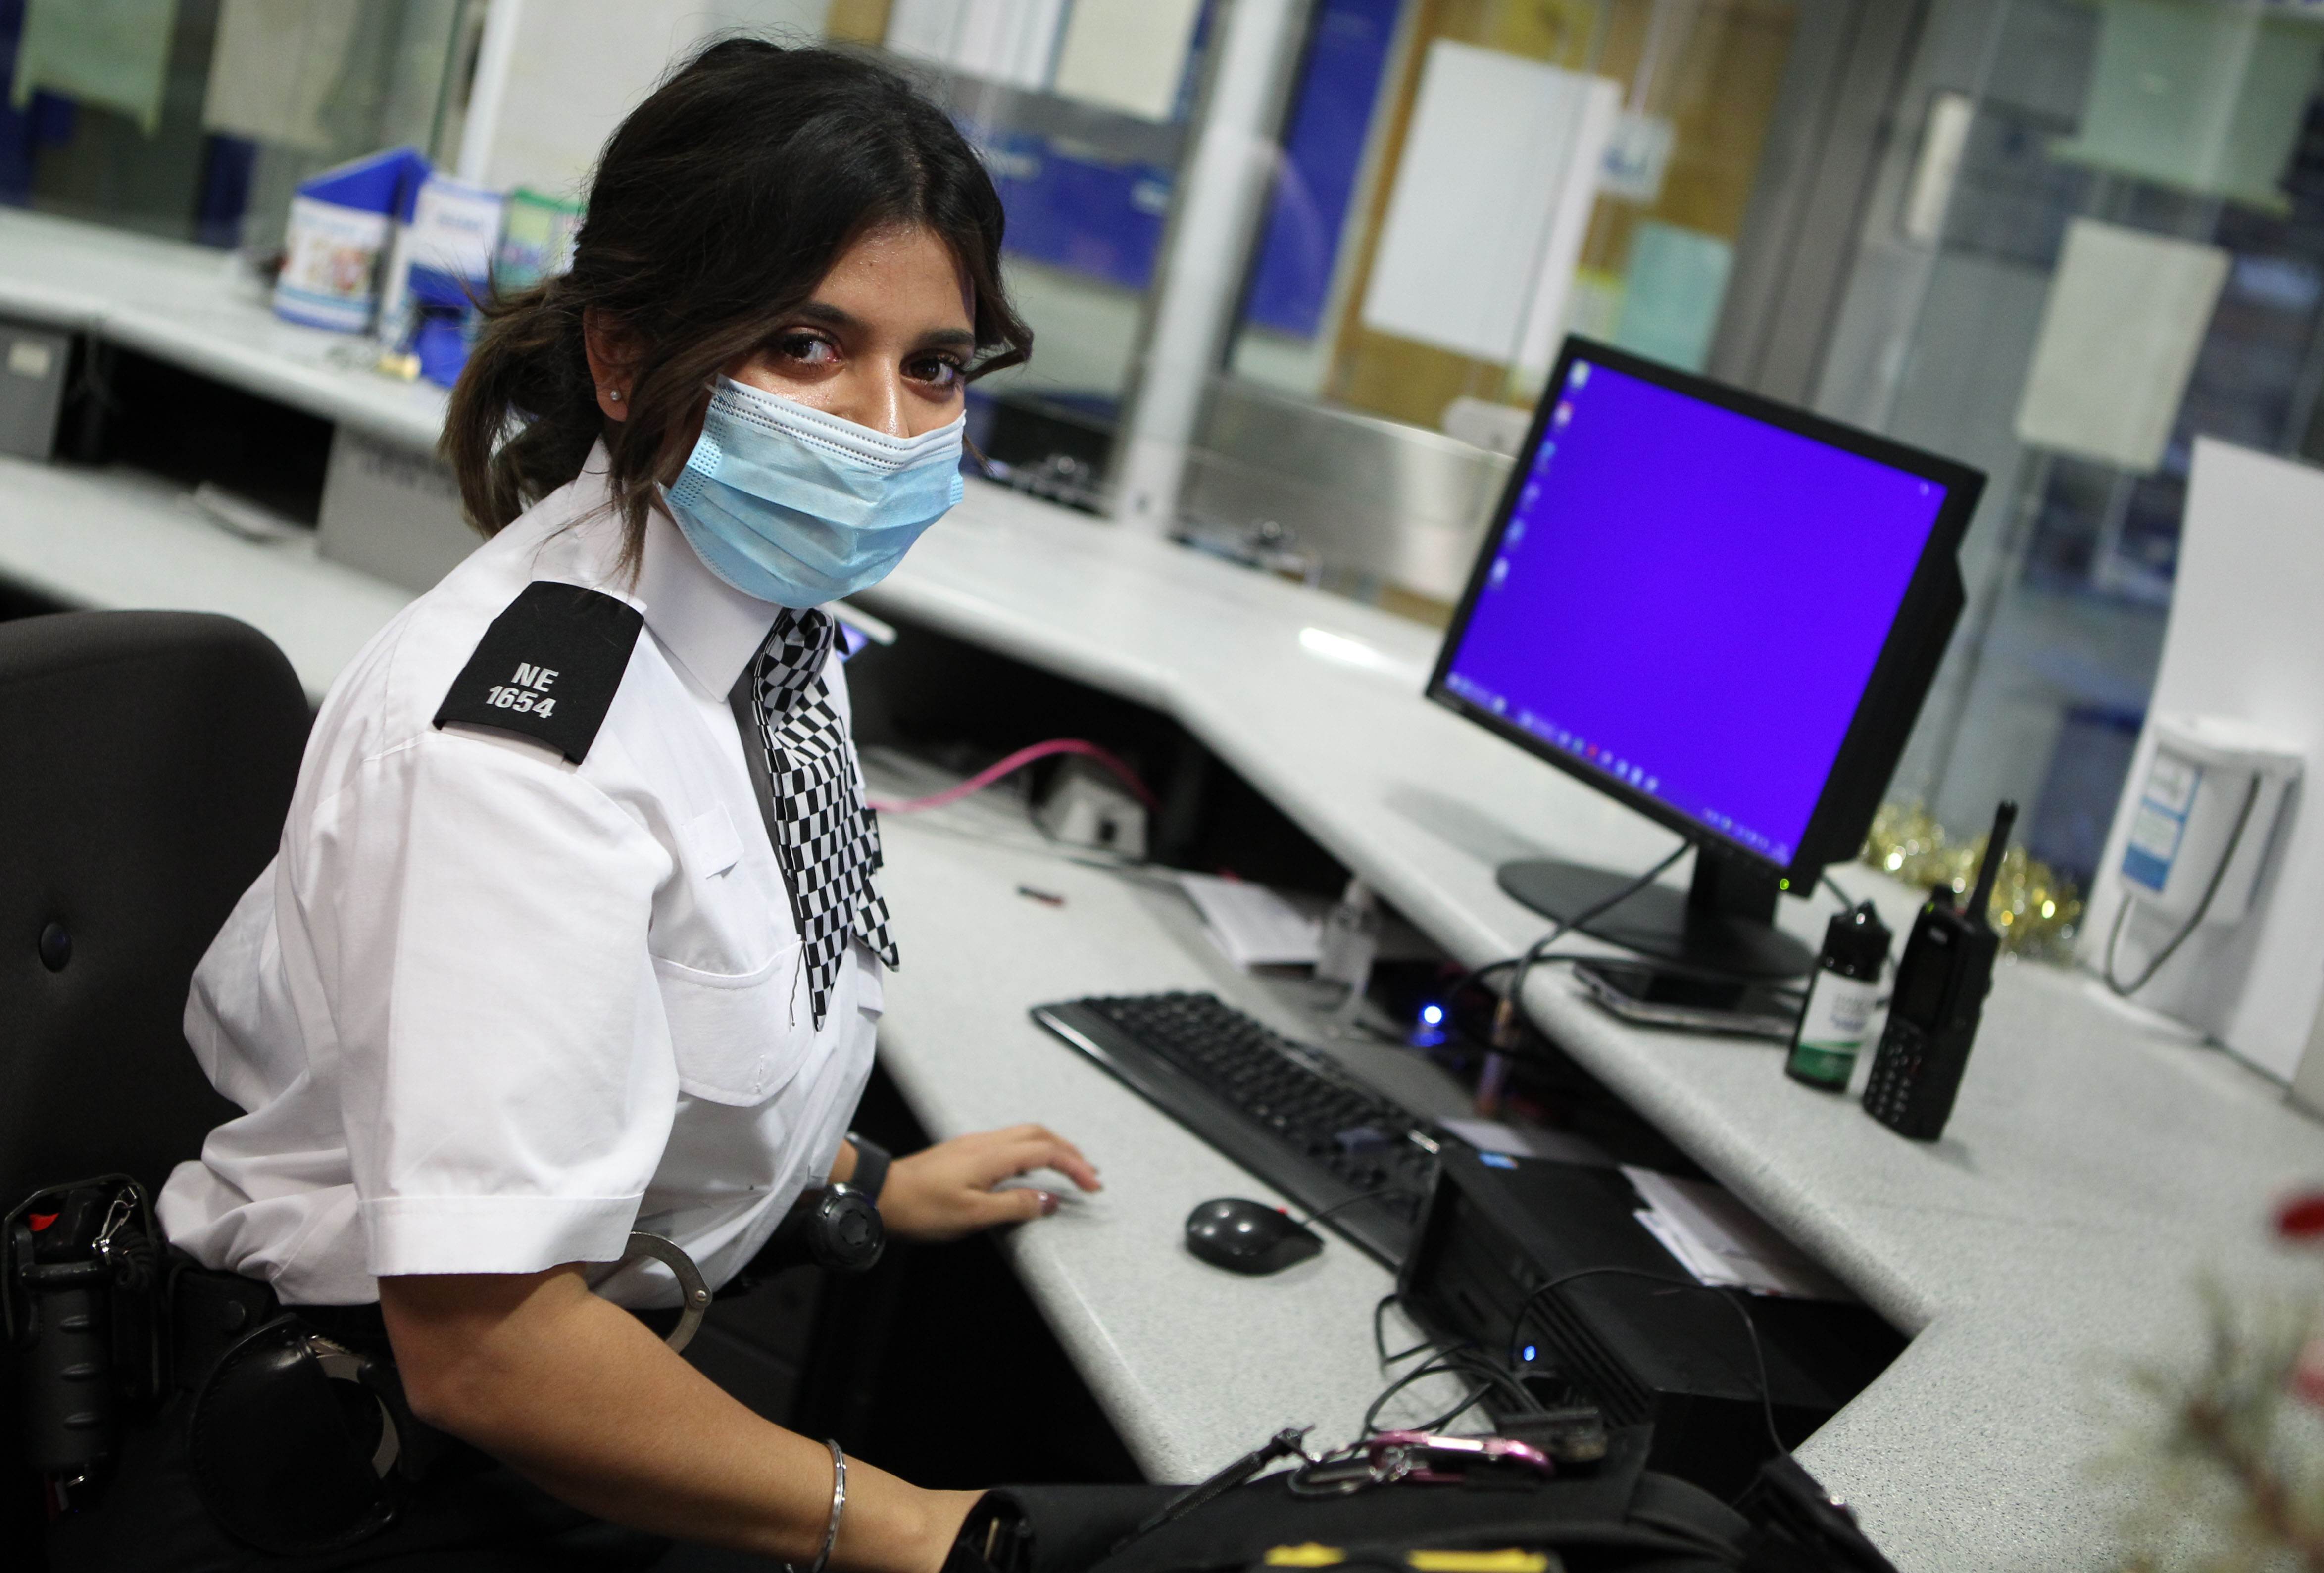 Metropolitan police officer sat at desk looking at camera